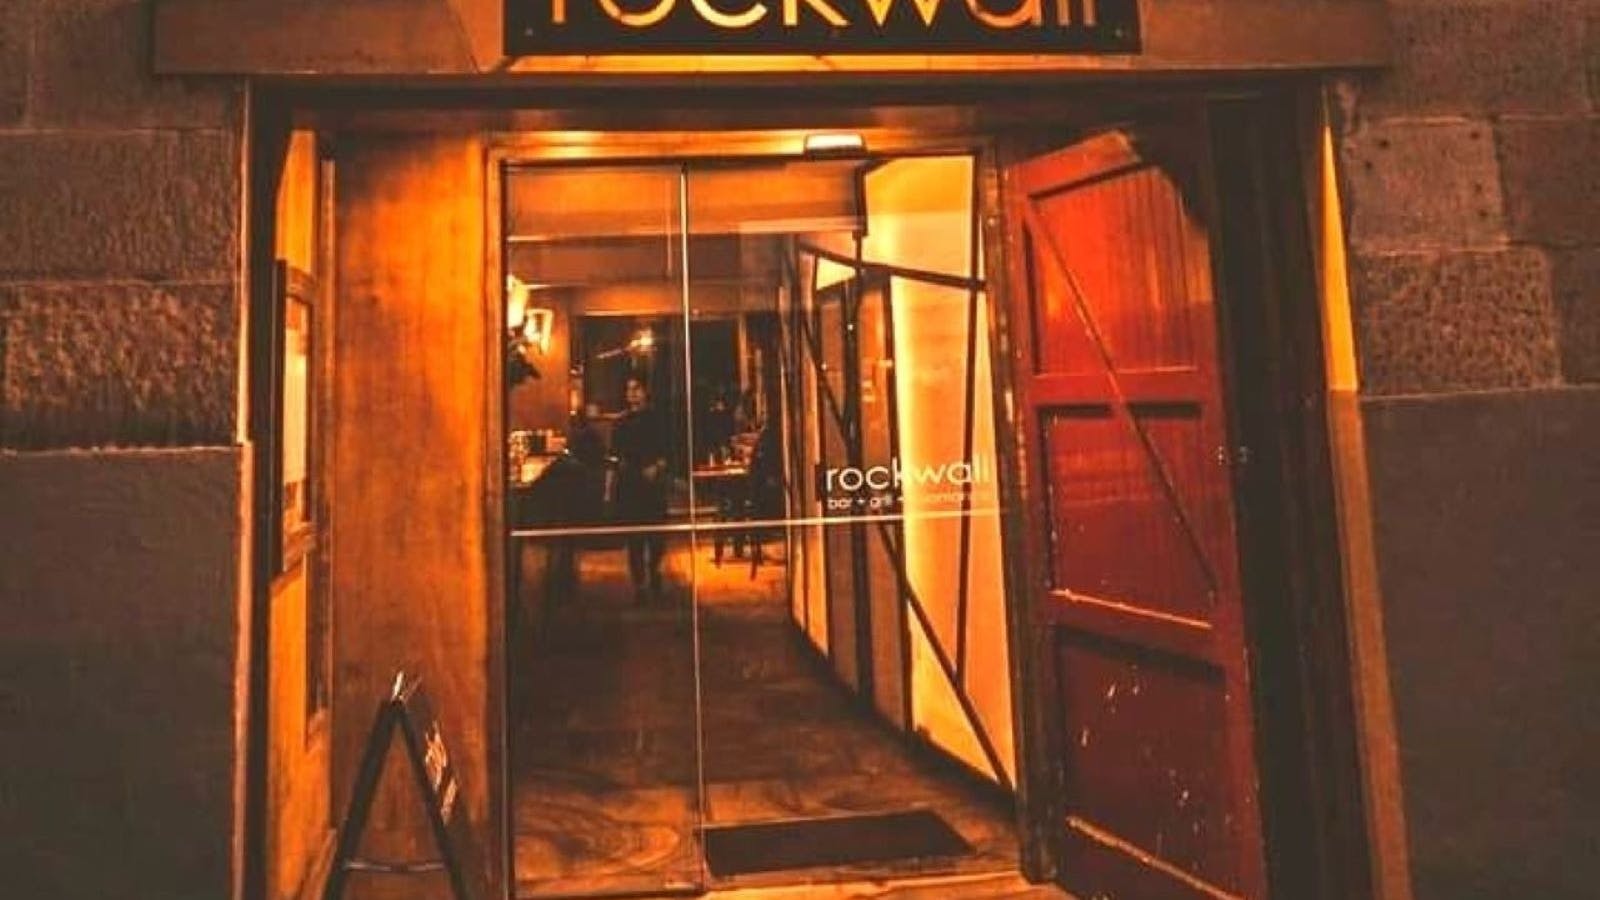 Rockwall Bar and Grill Façade